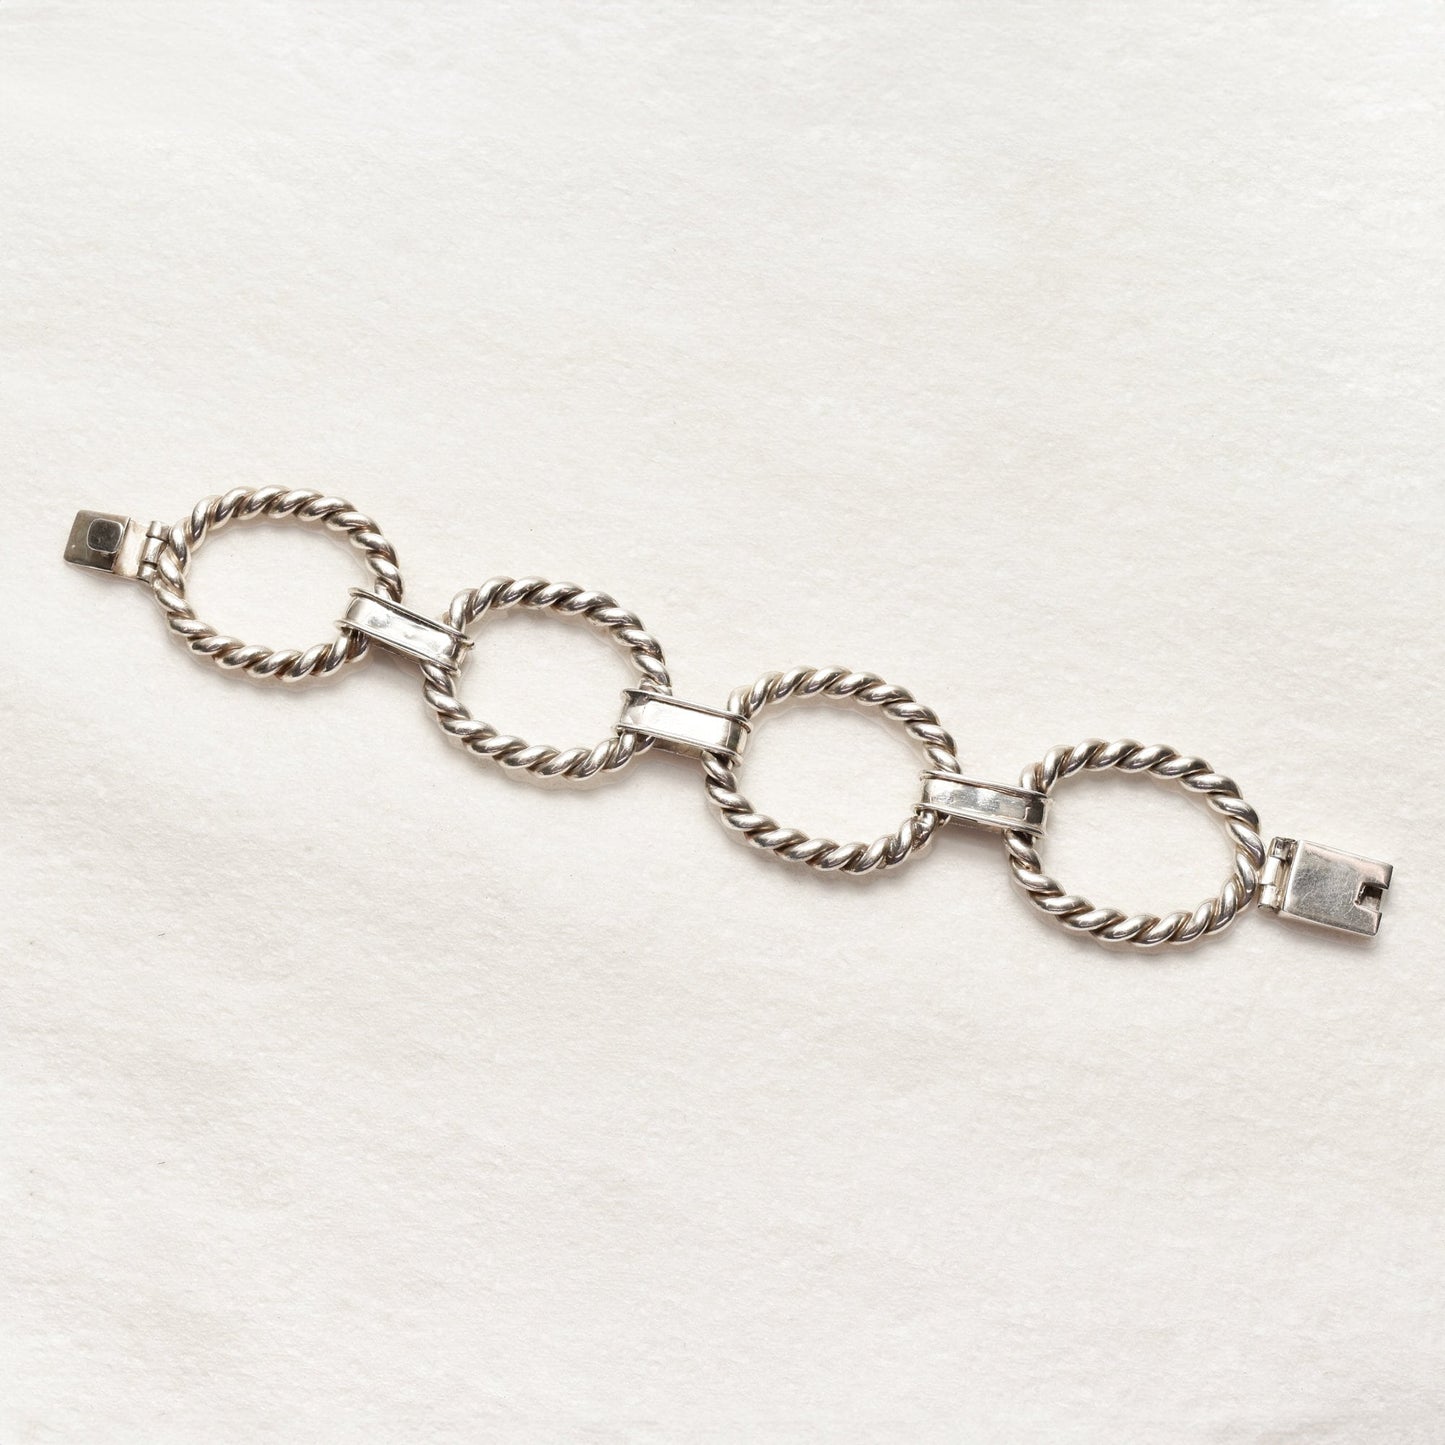 TAXCO Sterling Silver Lasso Oval Link Bracelet, Unisex Bracelet, Modernist Jewelry, 7.75"